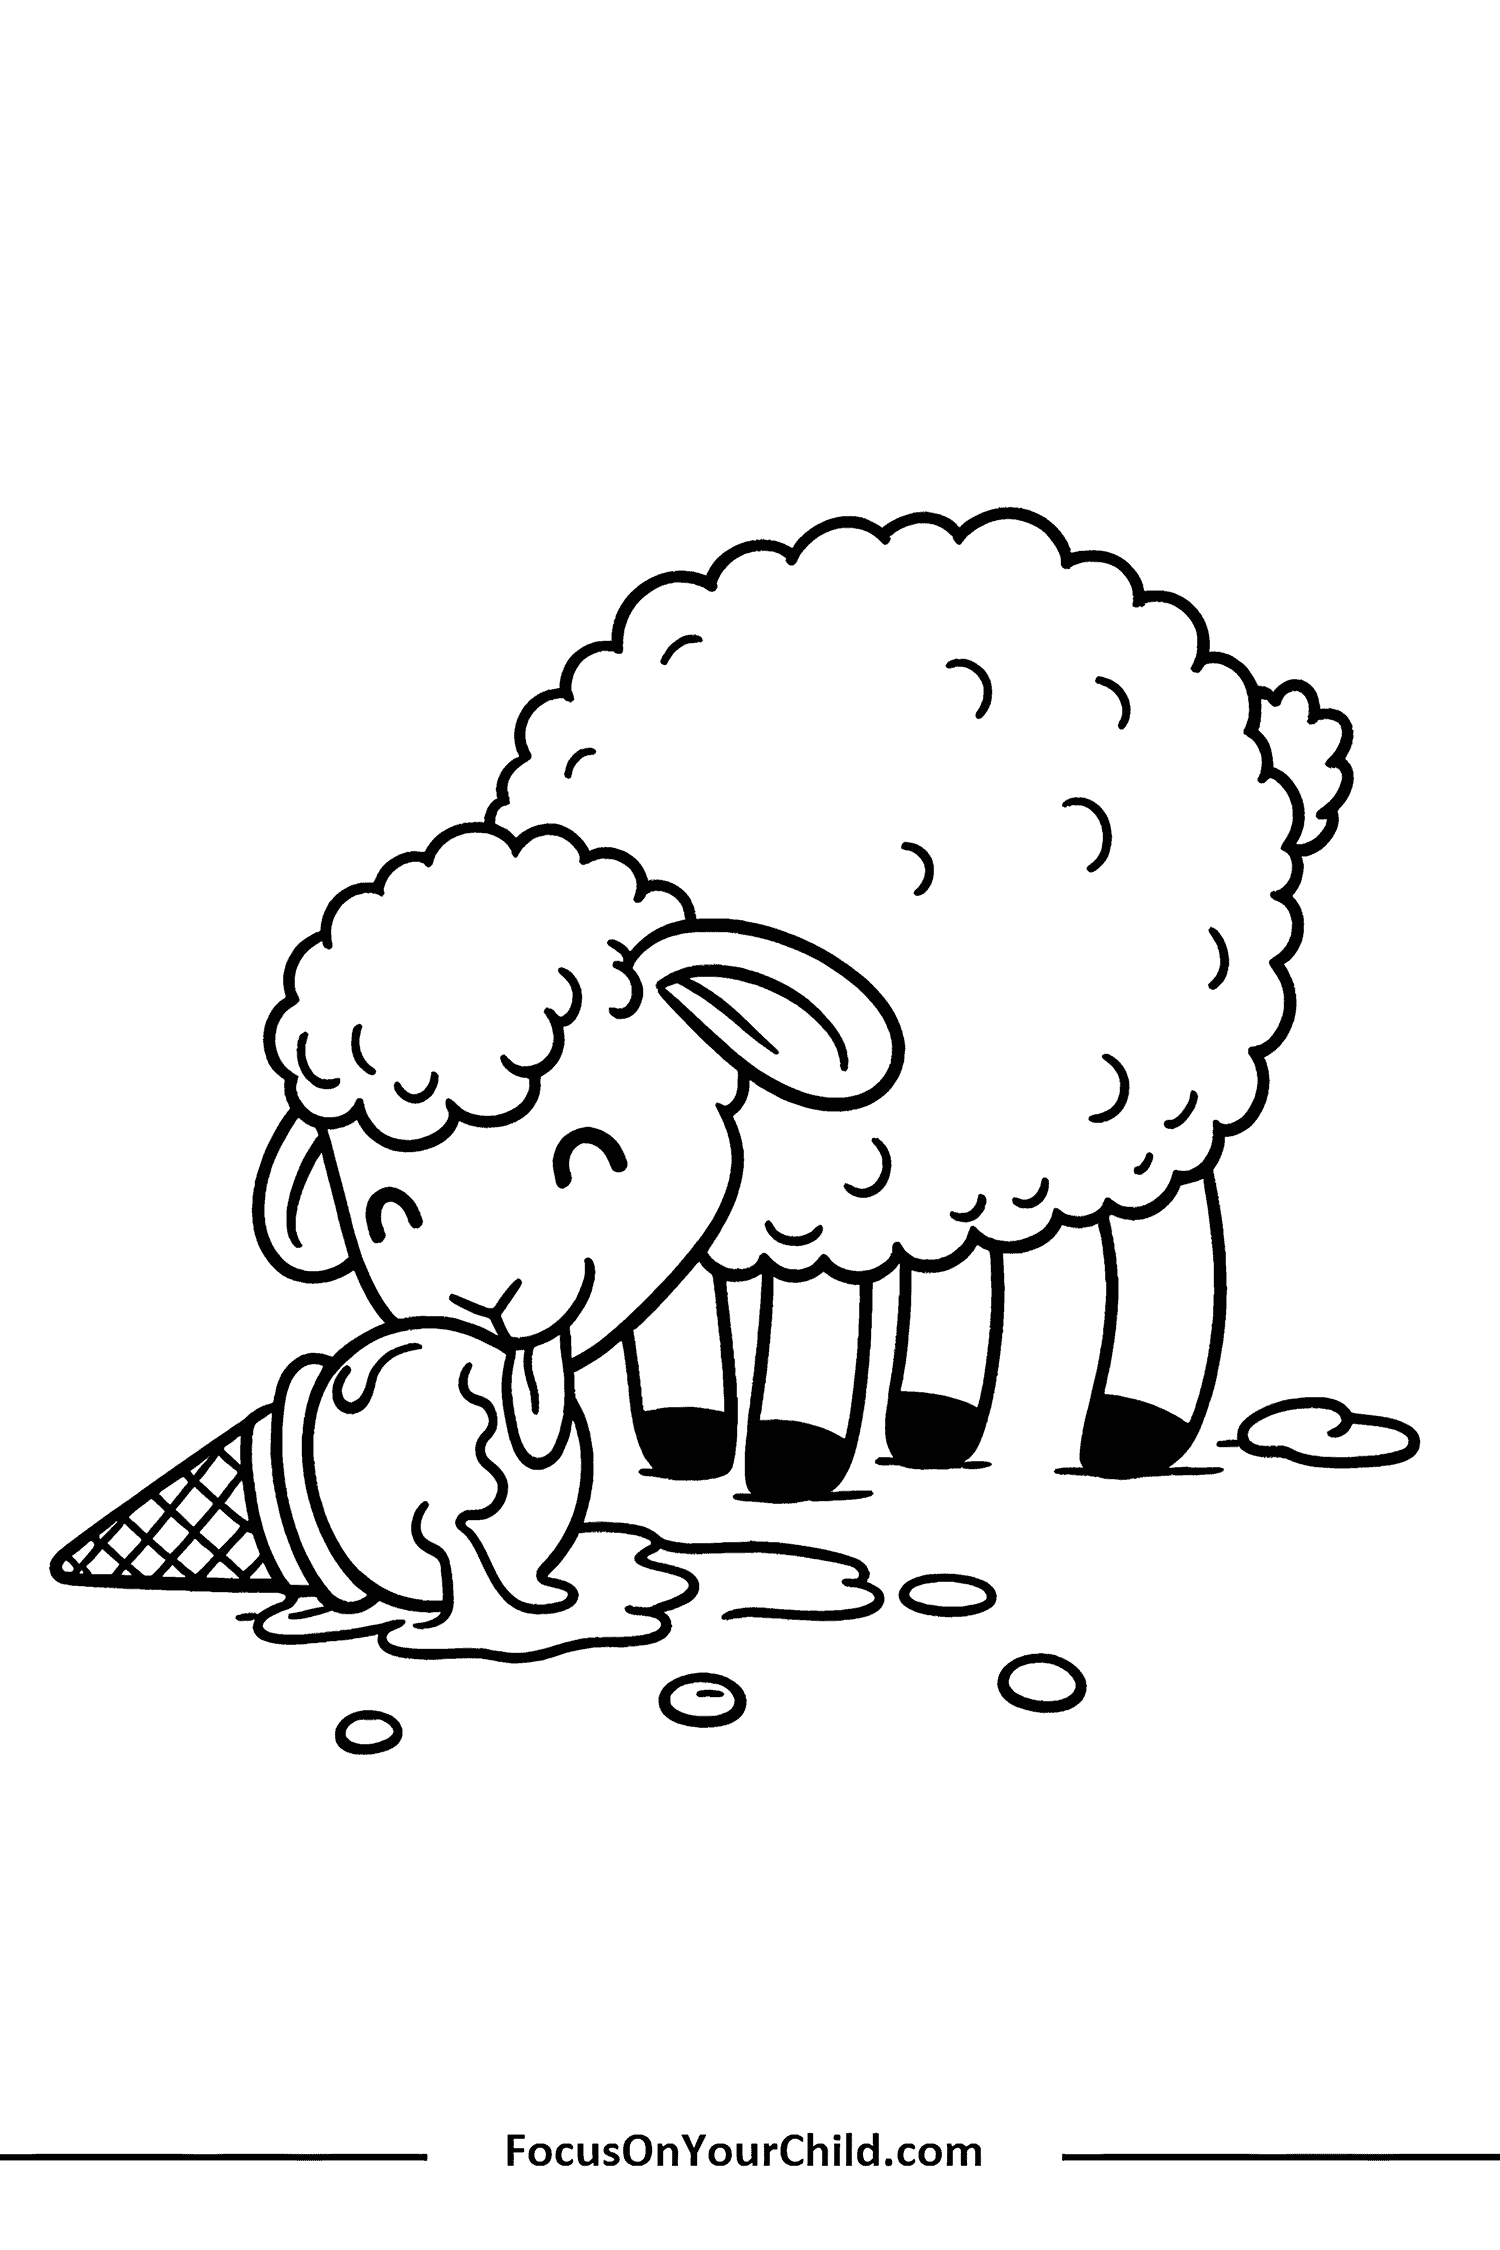 Adorable sheep enjoying ice cream in cute cartoon style.